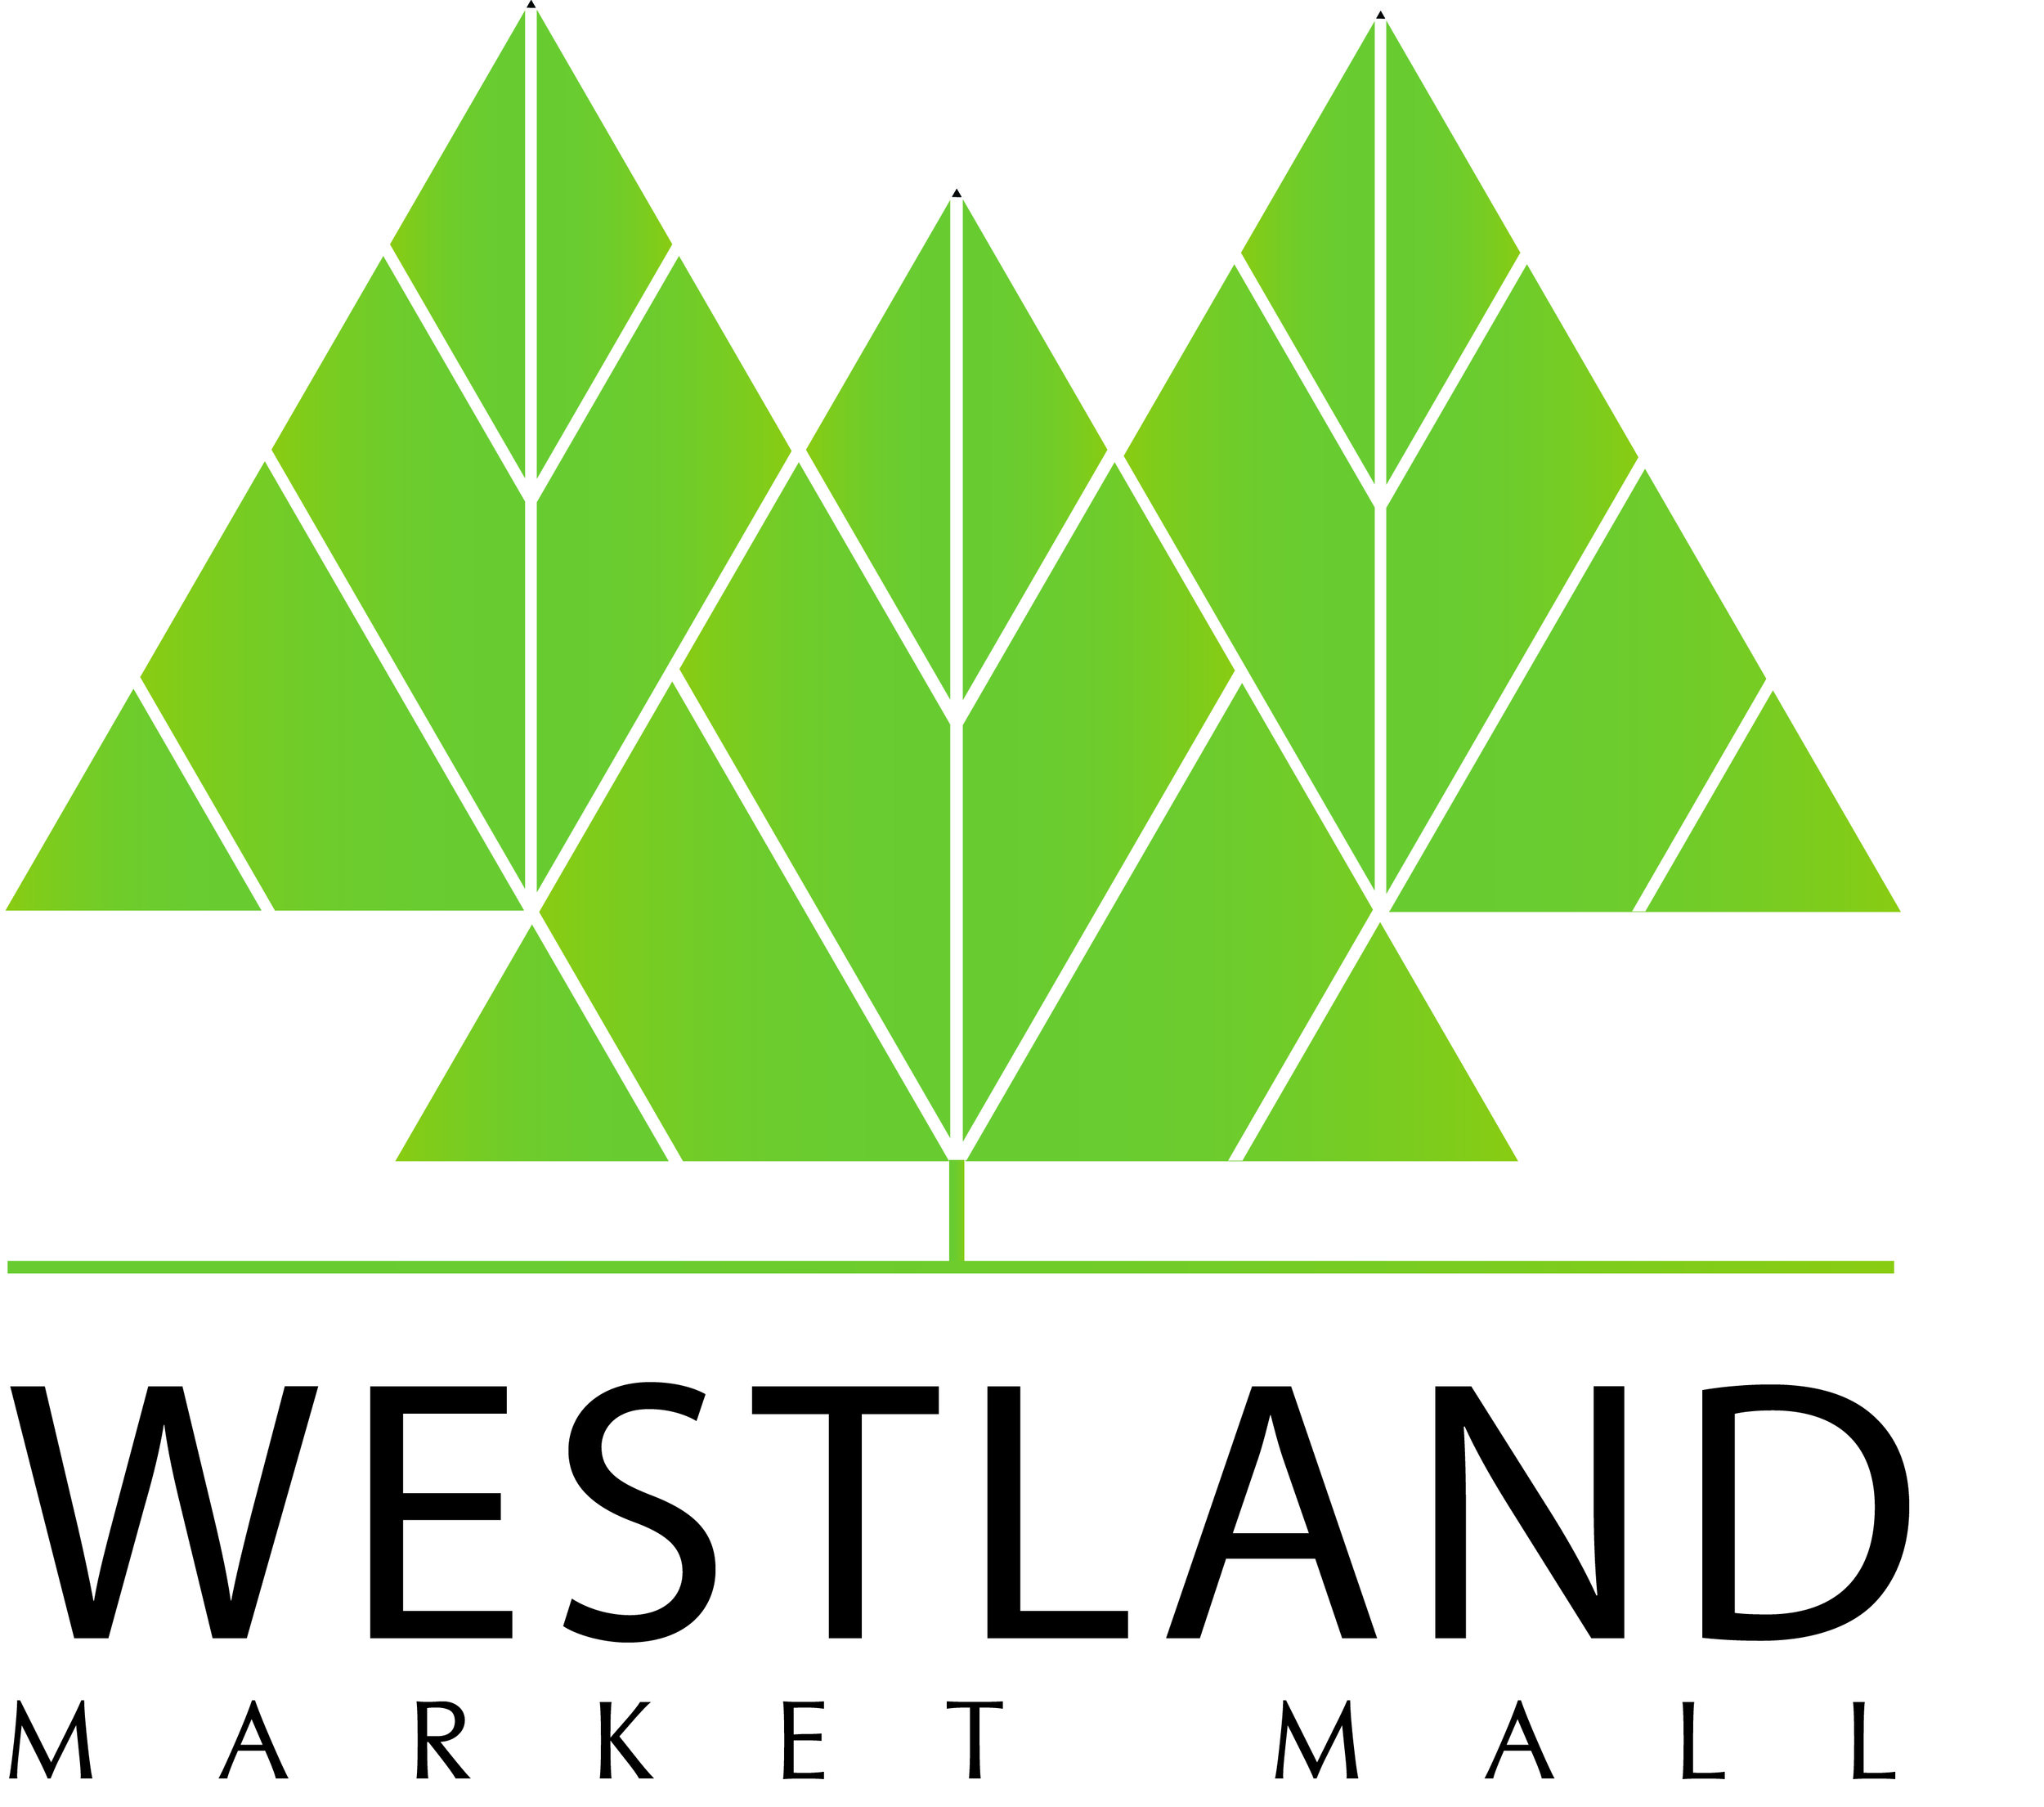 Westland Market Mall